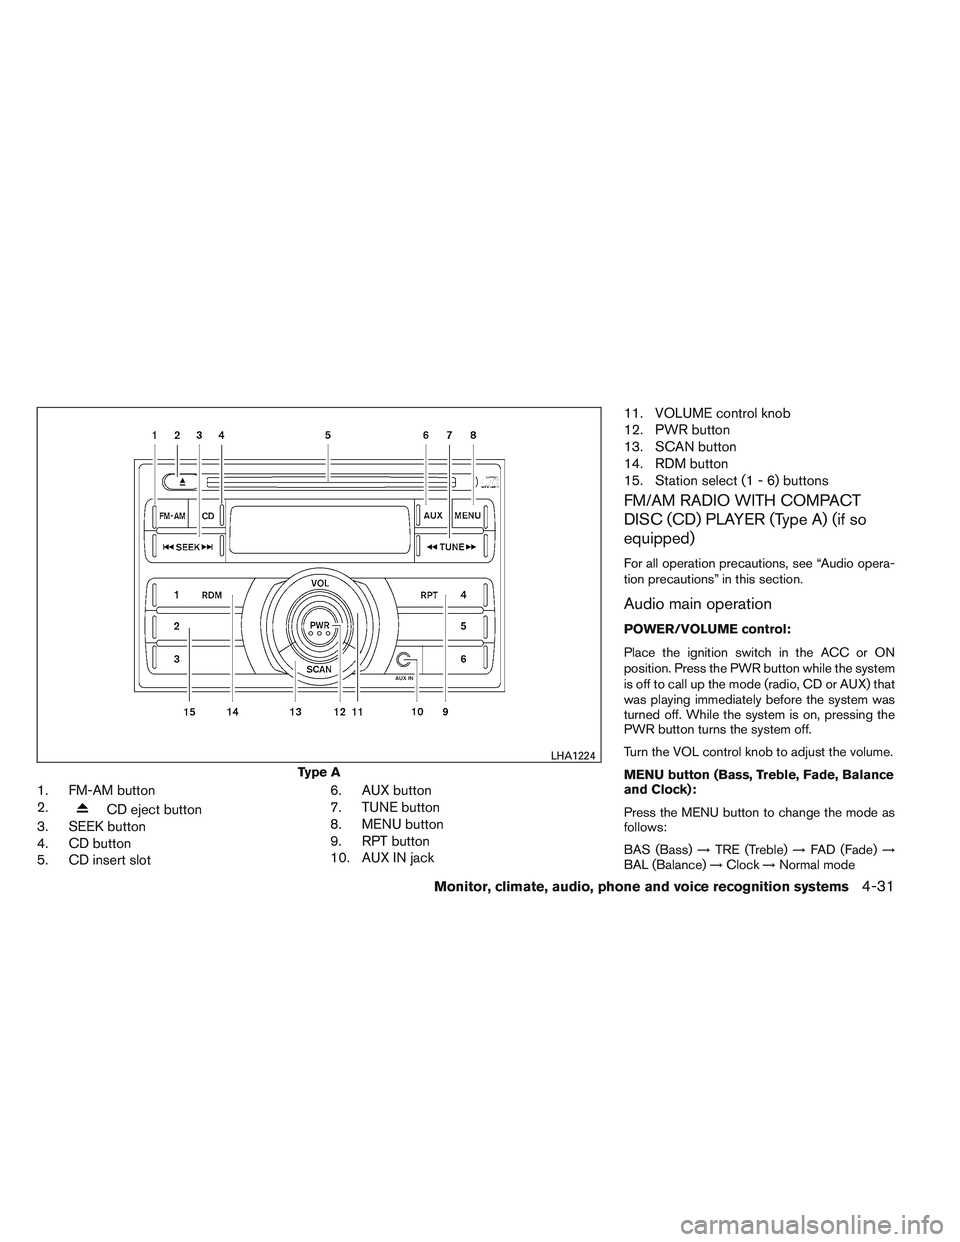 NISSAN VERSA 2014  Owners Manual 1. FM-AM button
2.
CD eject button
3. SEEK button
4. CD button
5. CD insert slot 6. AUX button
7. TUNE button
8. MENU button
9. RPT button
10. AUX IN jack11. VOLUME control knob
12. PWR button
13. SCA